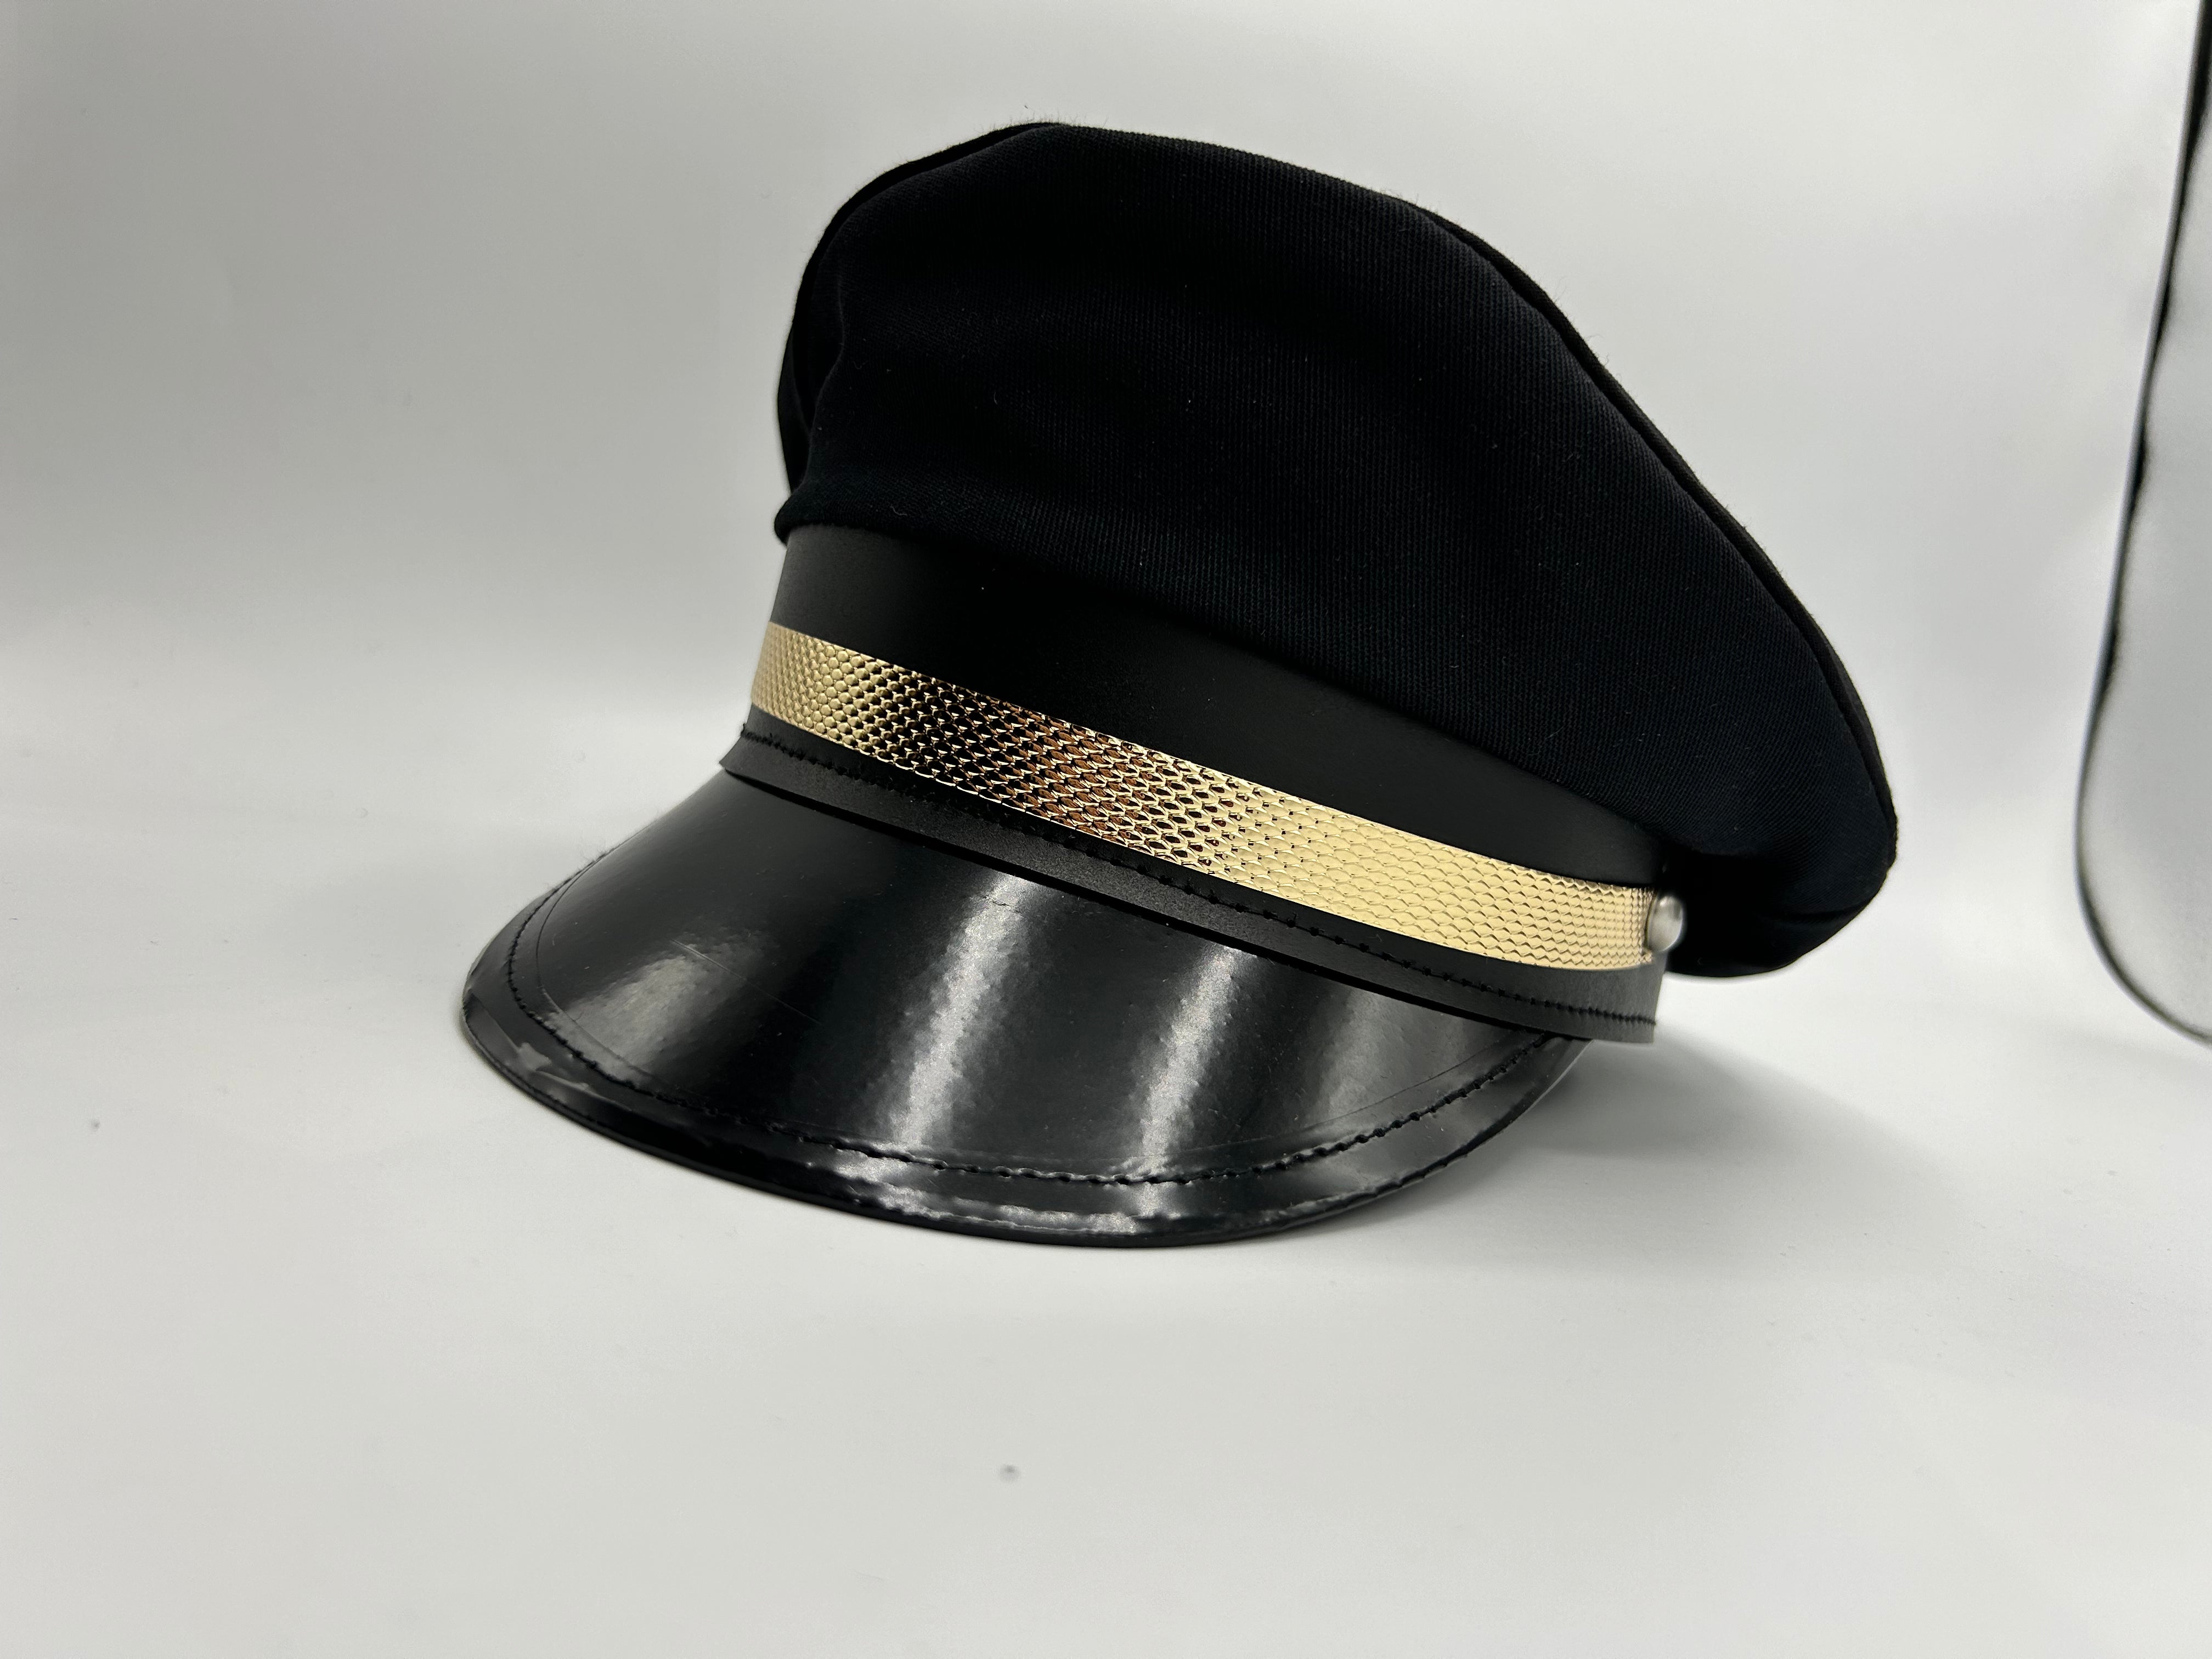 Gorra de conductor/militar